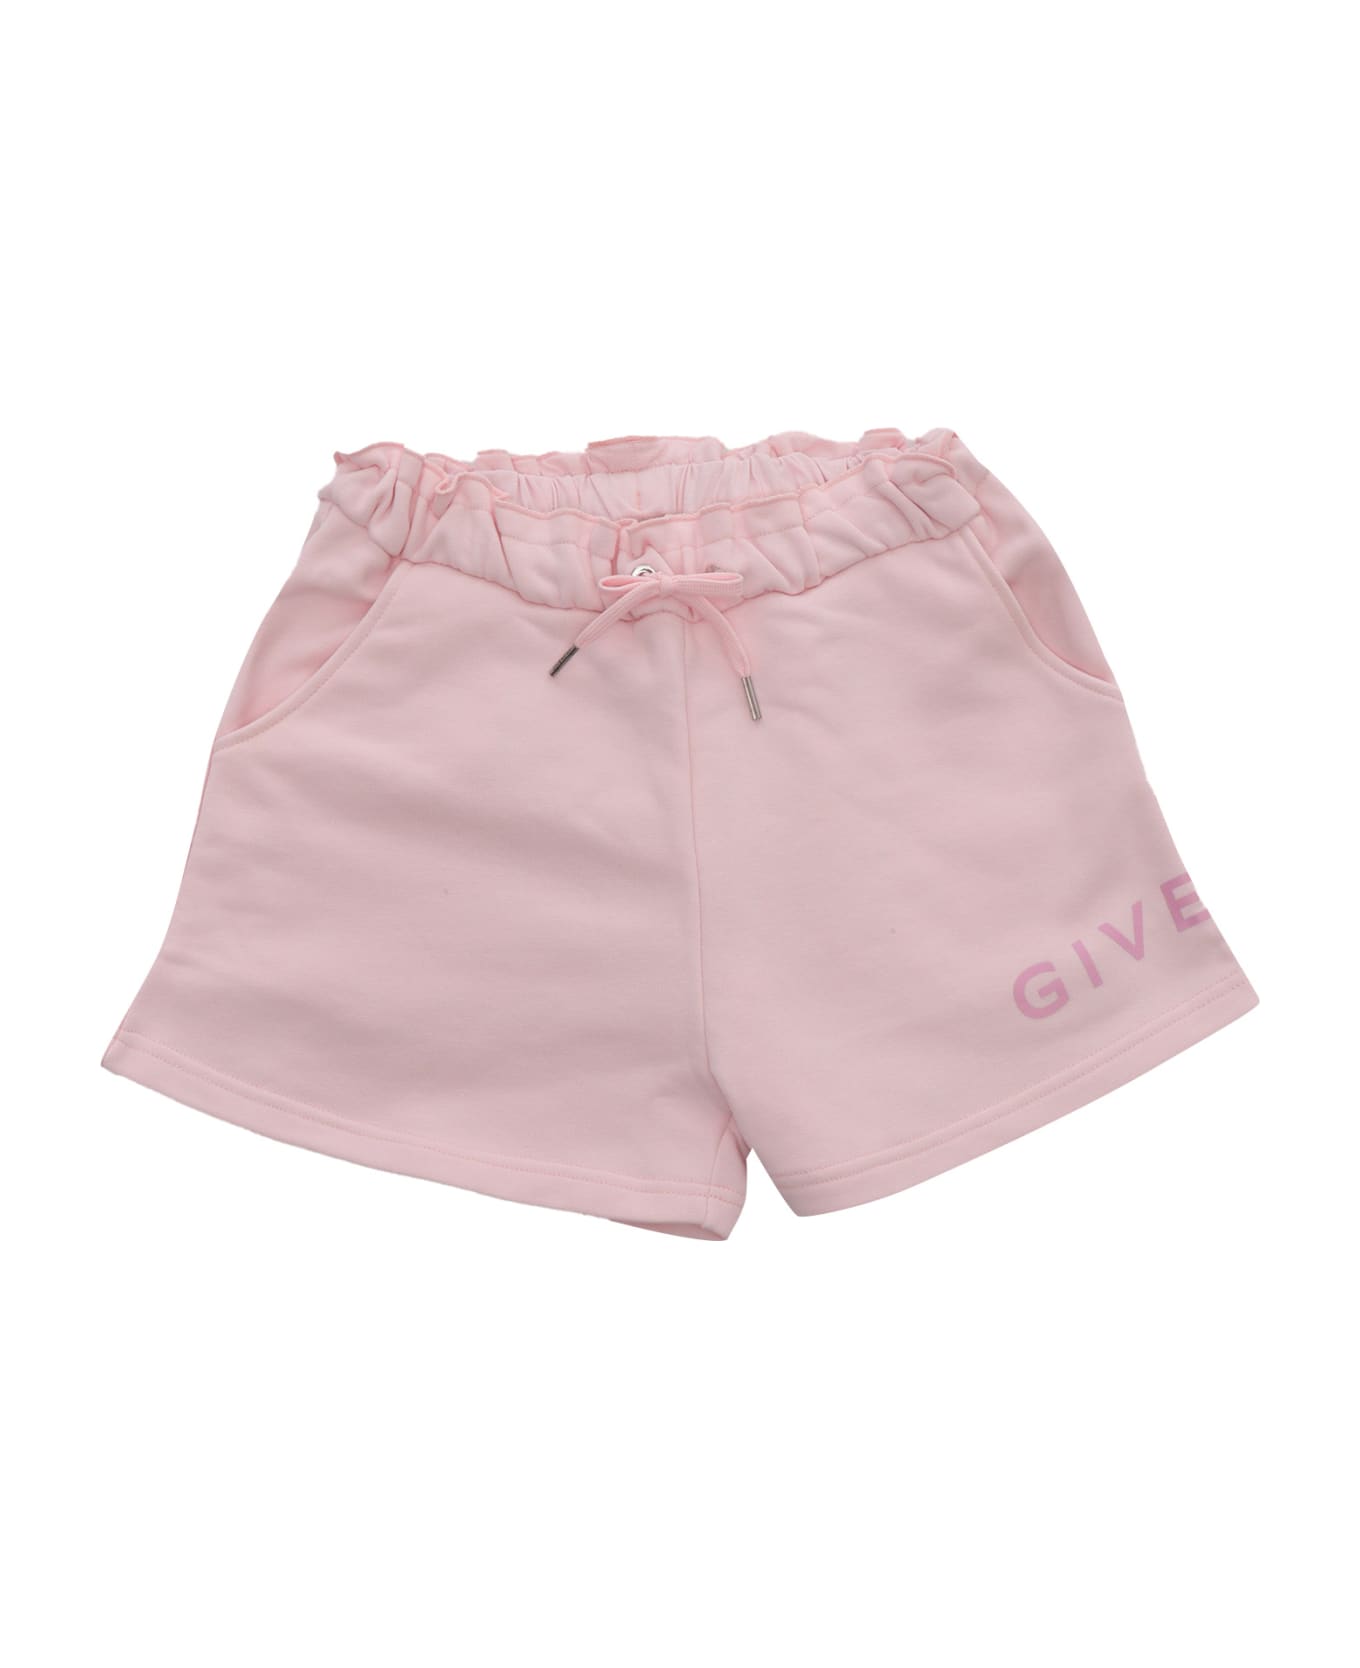 Givenchy Pink Shorts With Logo - PINK ボトムス